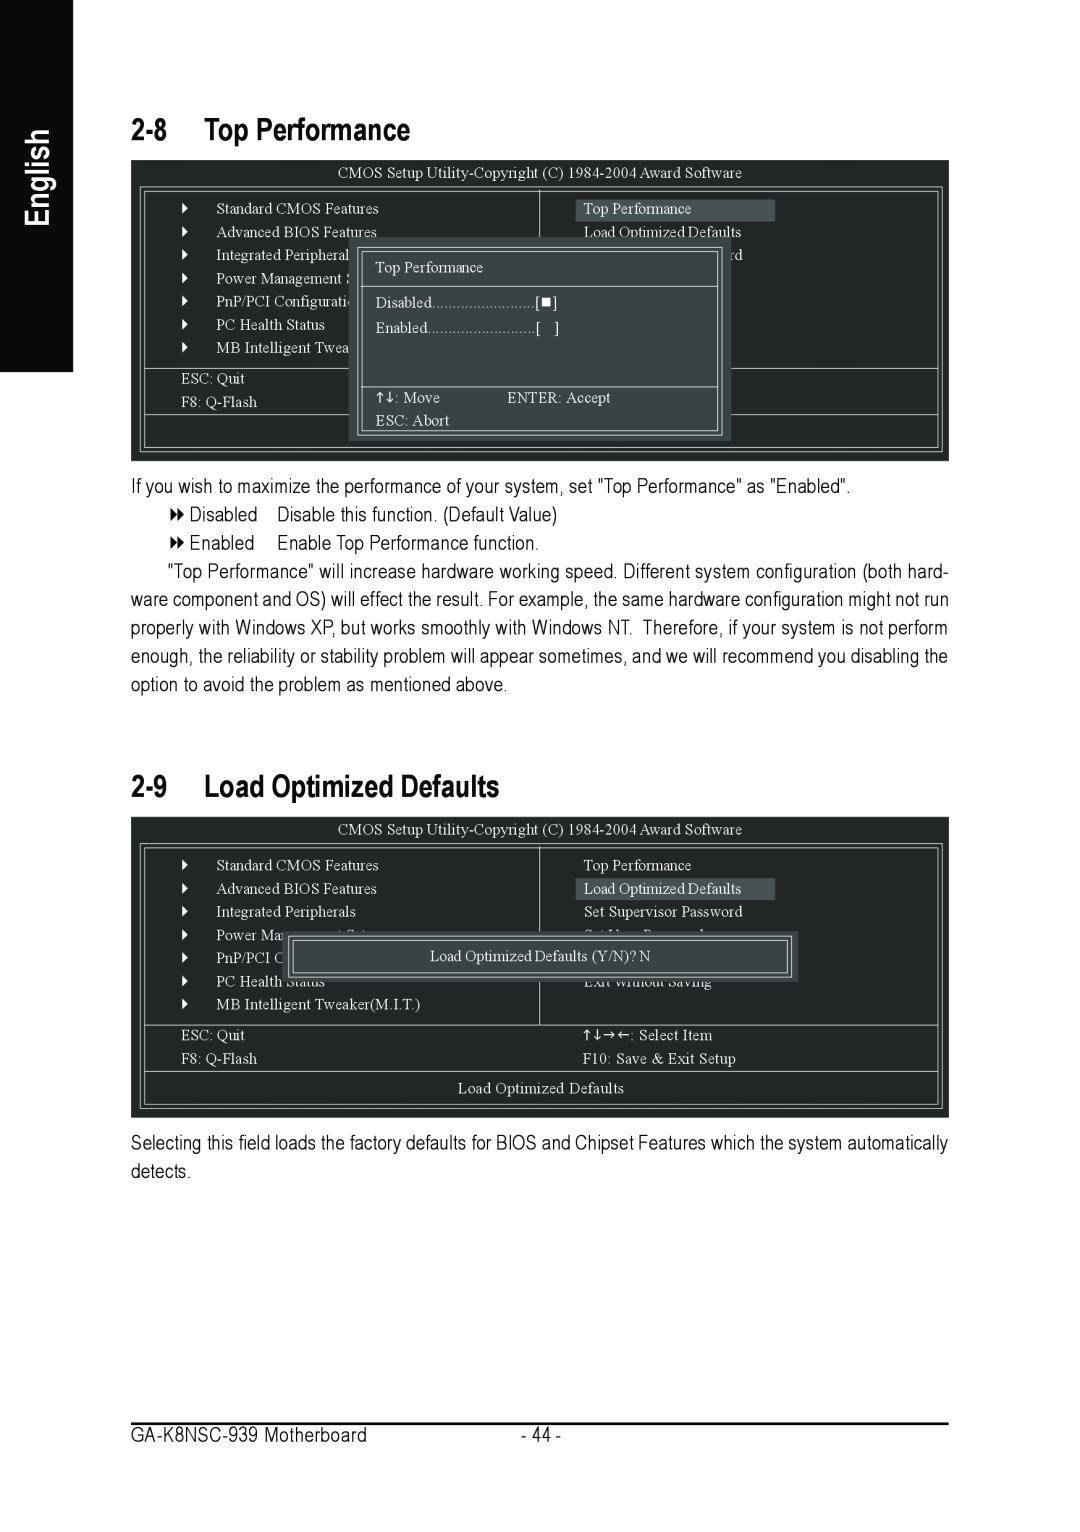 AMD GA-K8NSC-939 user manual Load Optimized Defaults, English, Enable Top Performance function 